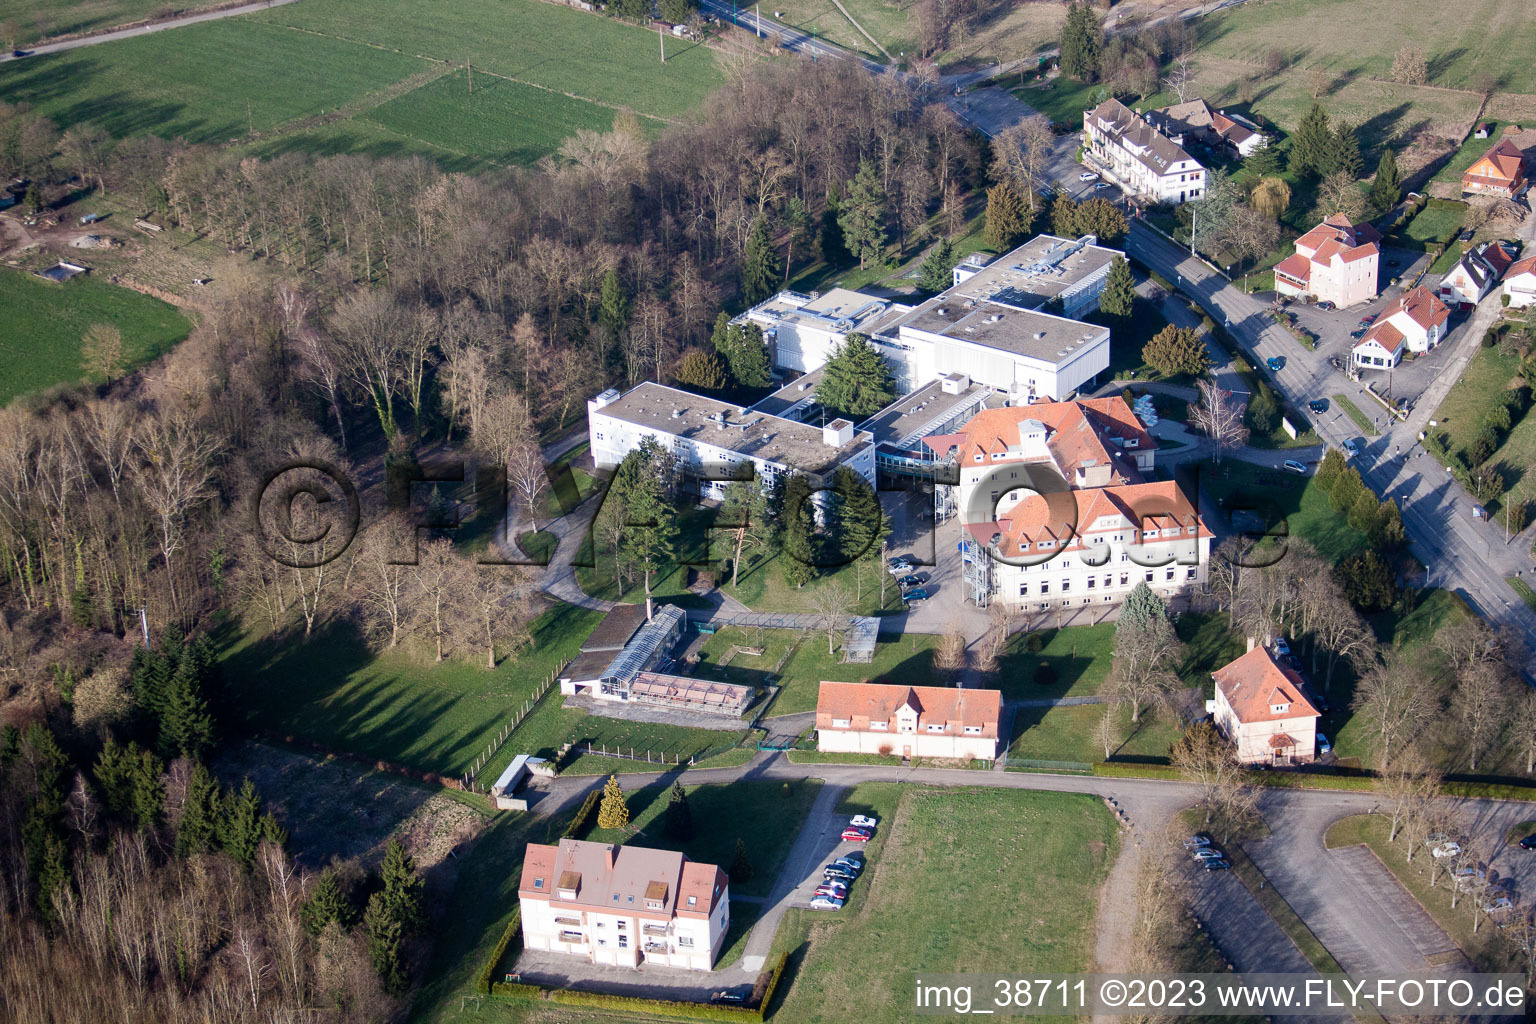 Morsbronn-les-Bains in the state Bas-Rhin, France seen from a drone